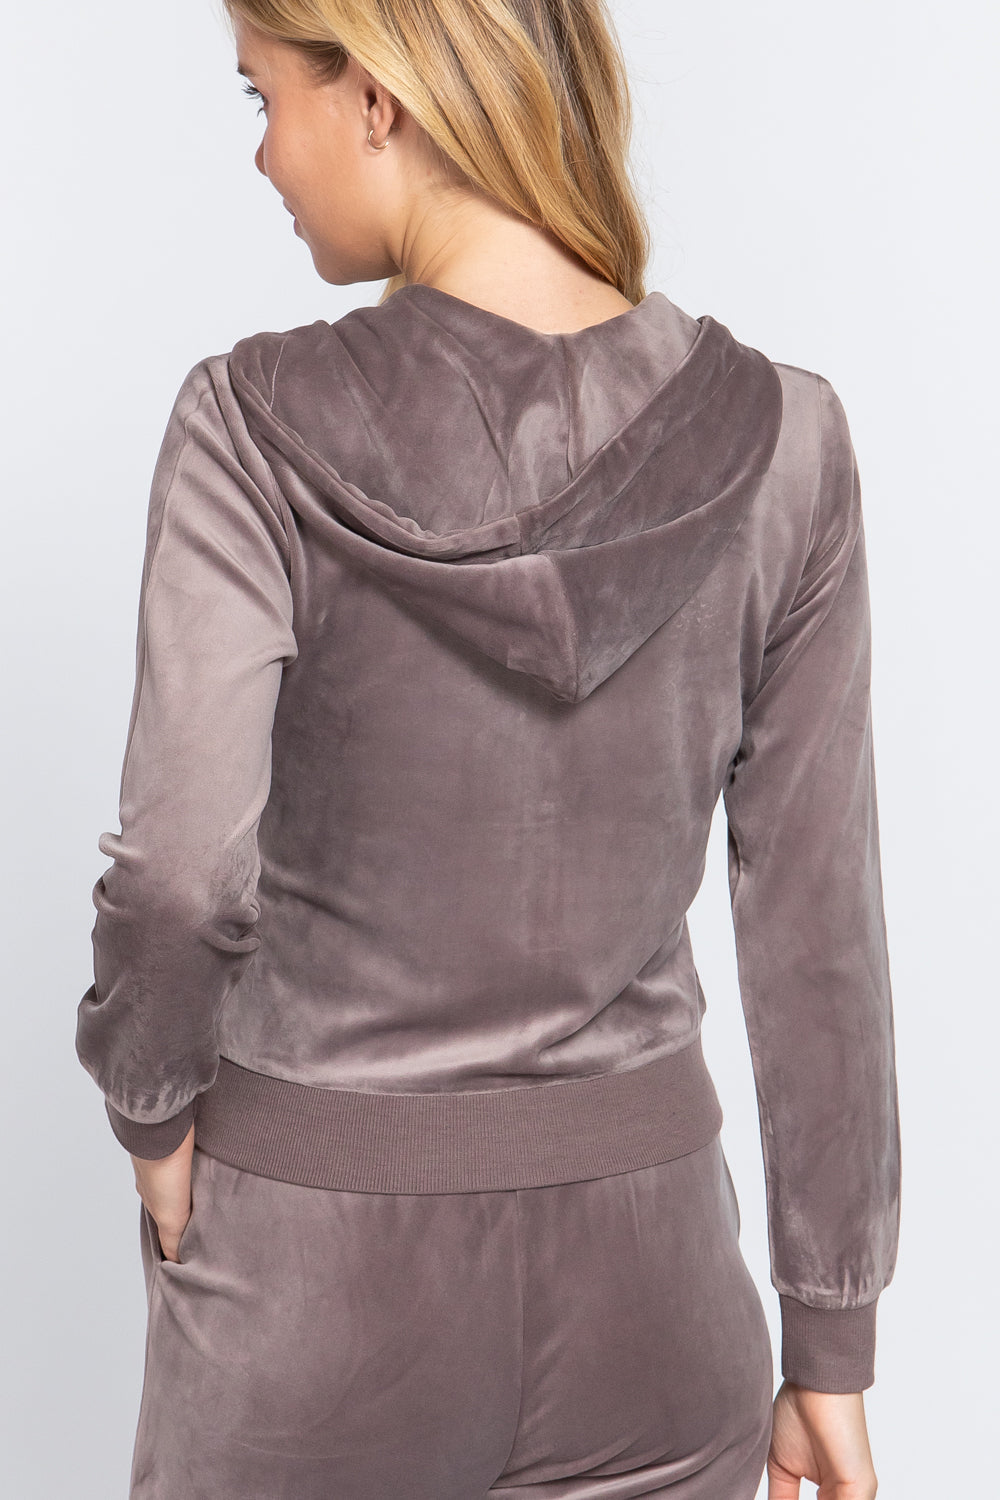 Long Sleeve Velour Hoodie Zip Up Jacket - Tigbul's Fashion